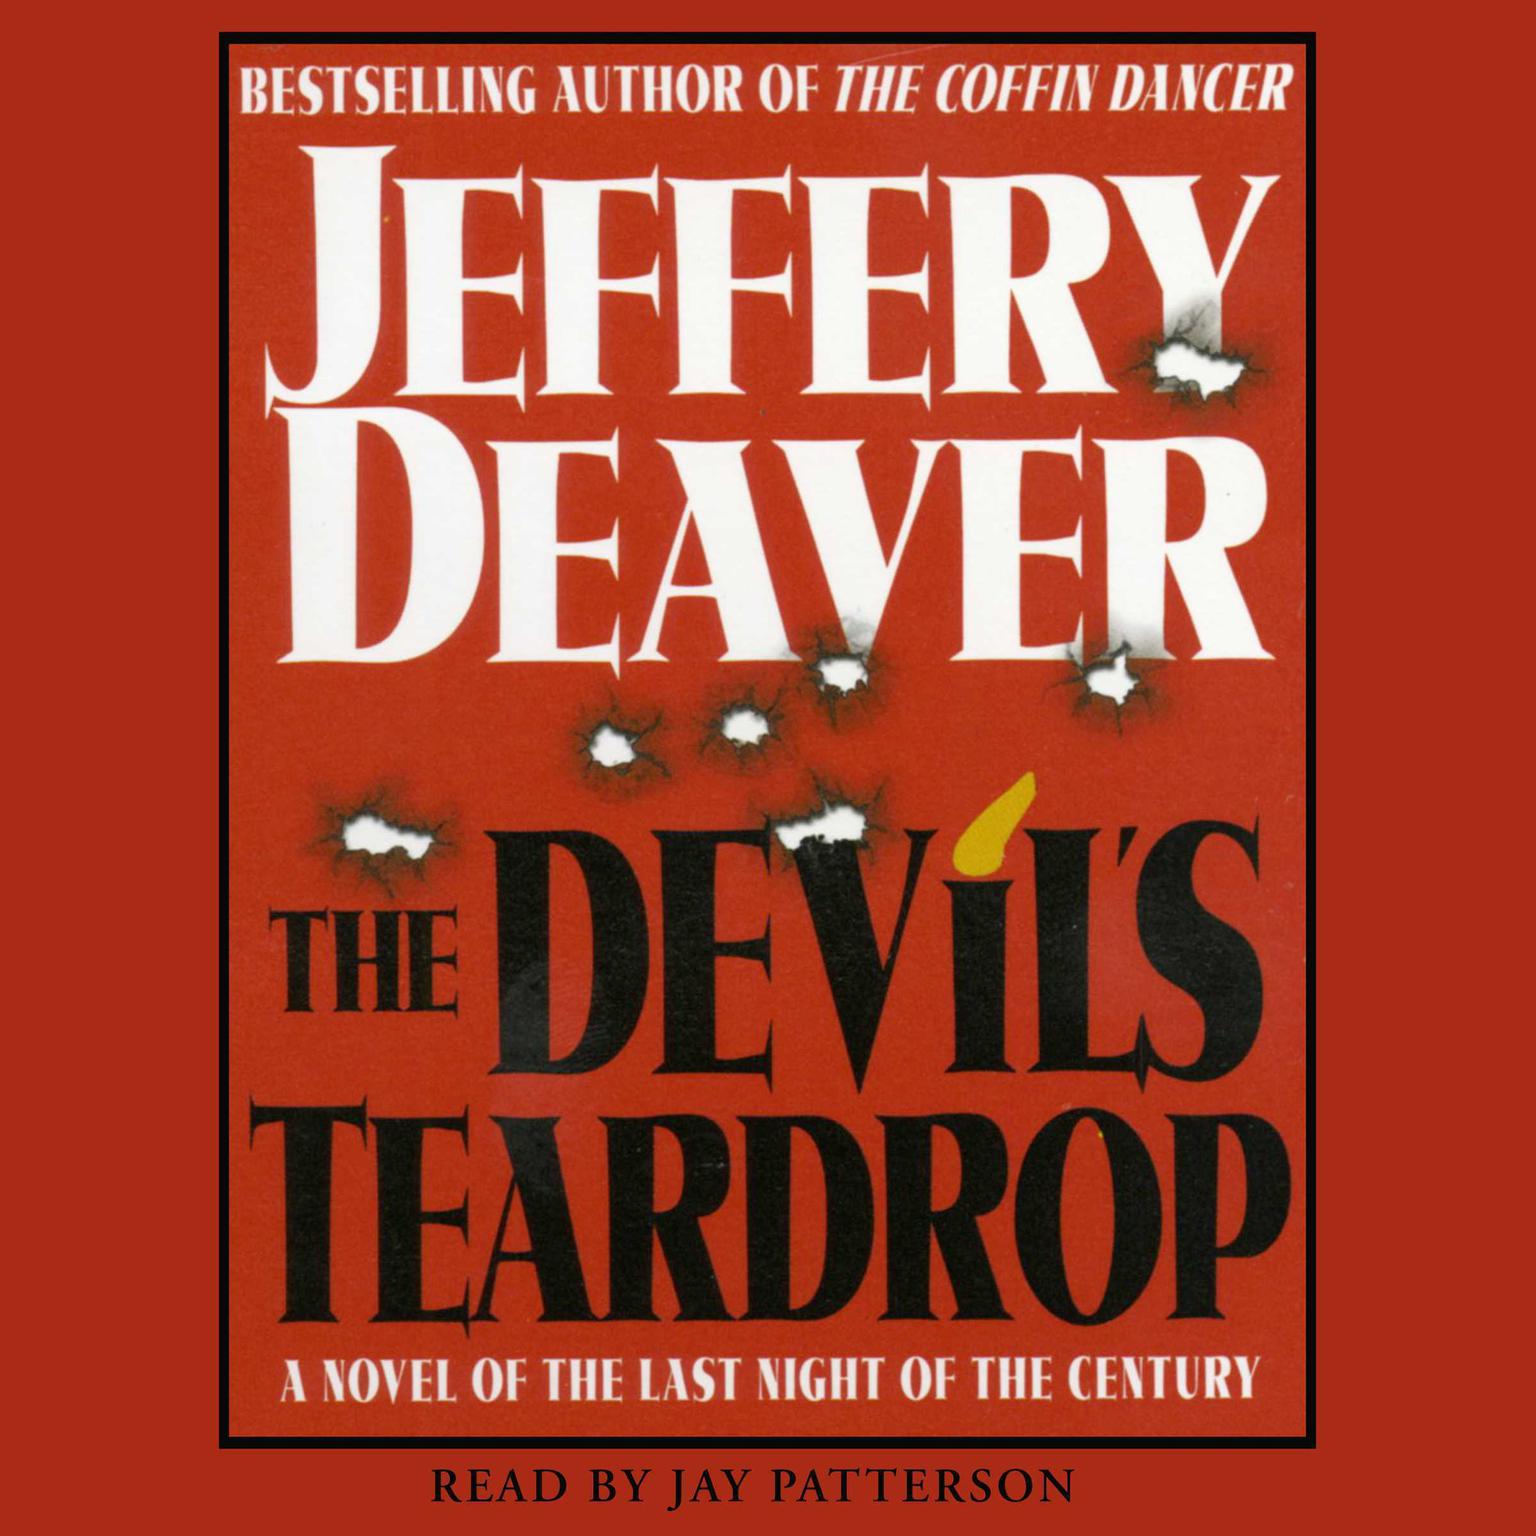 Devils Teardrop (Abridged): A Novel of the Last Night of the Century Audiobook, by Jeffery Deaver